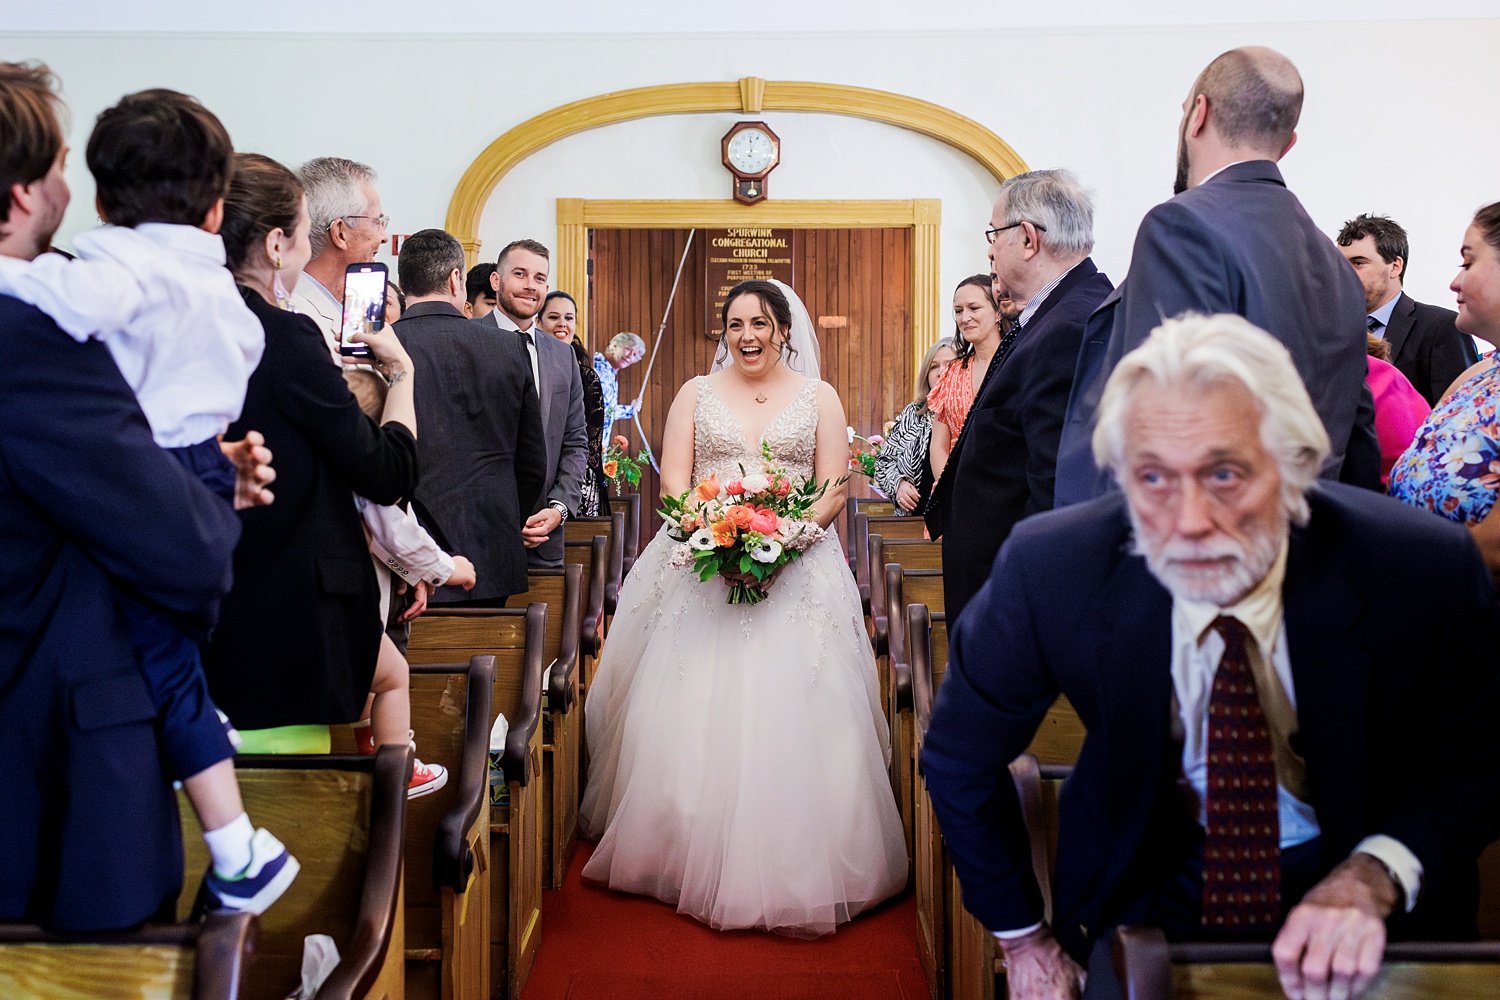 Bride grins from ear to ear as she enters the wedding chapel in Cape Elizabeth